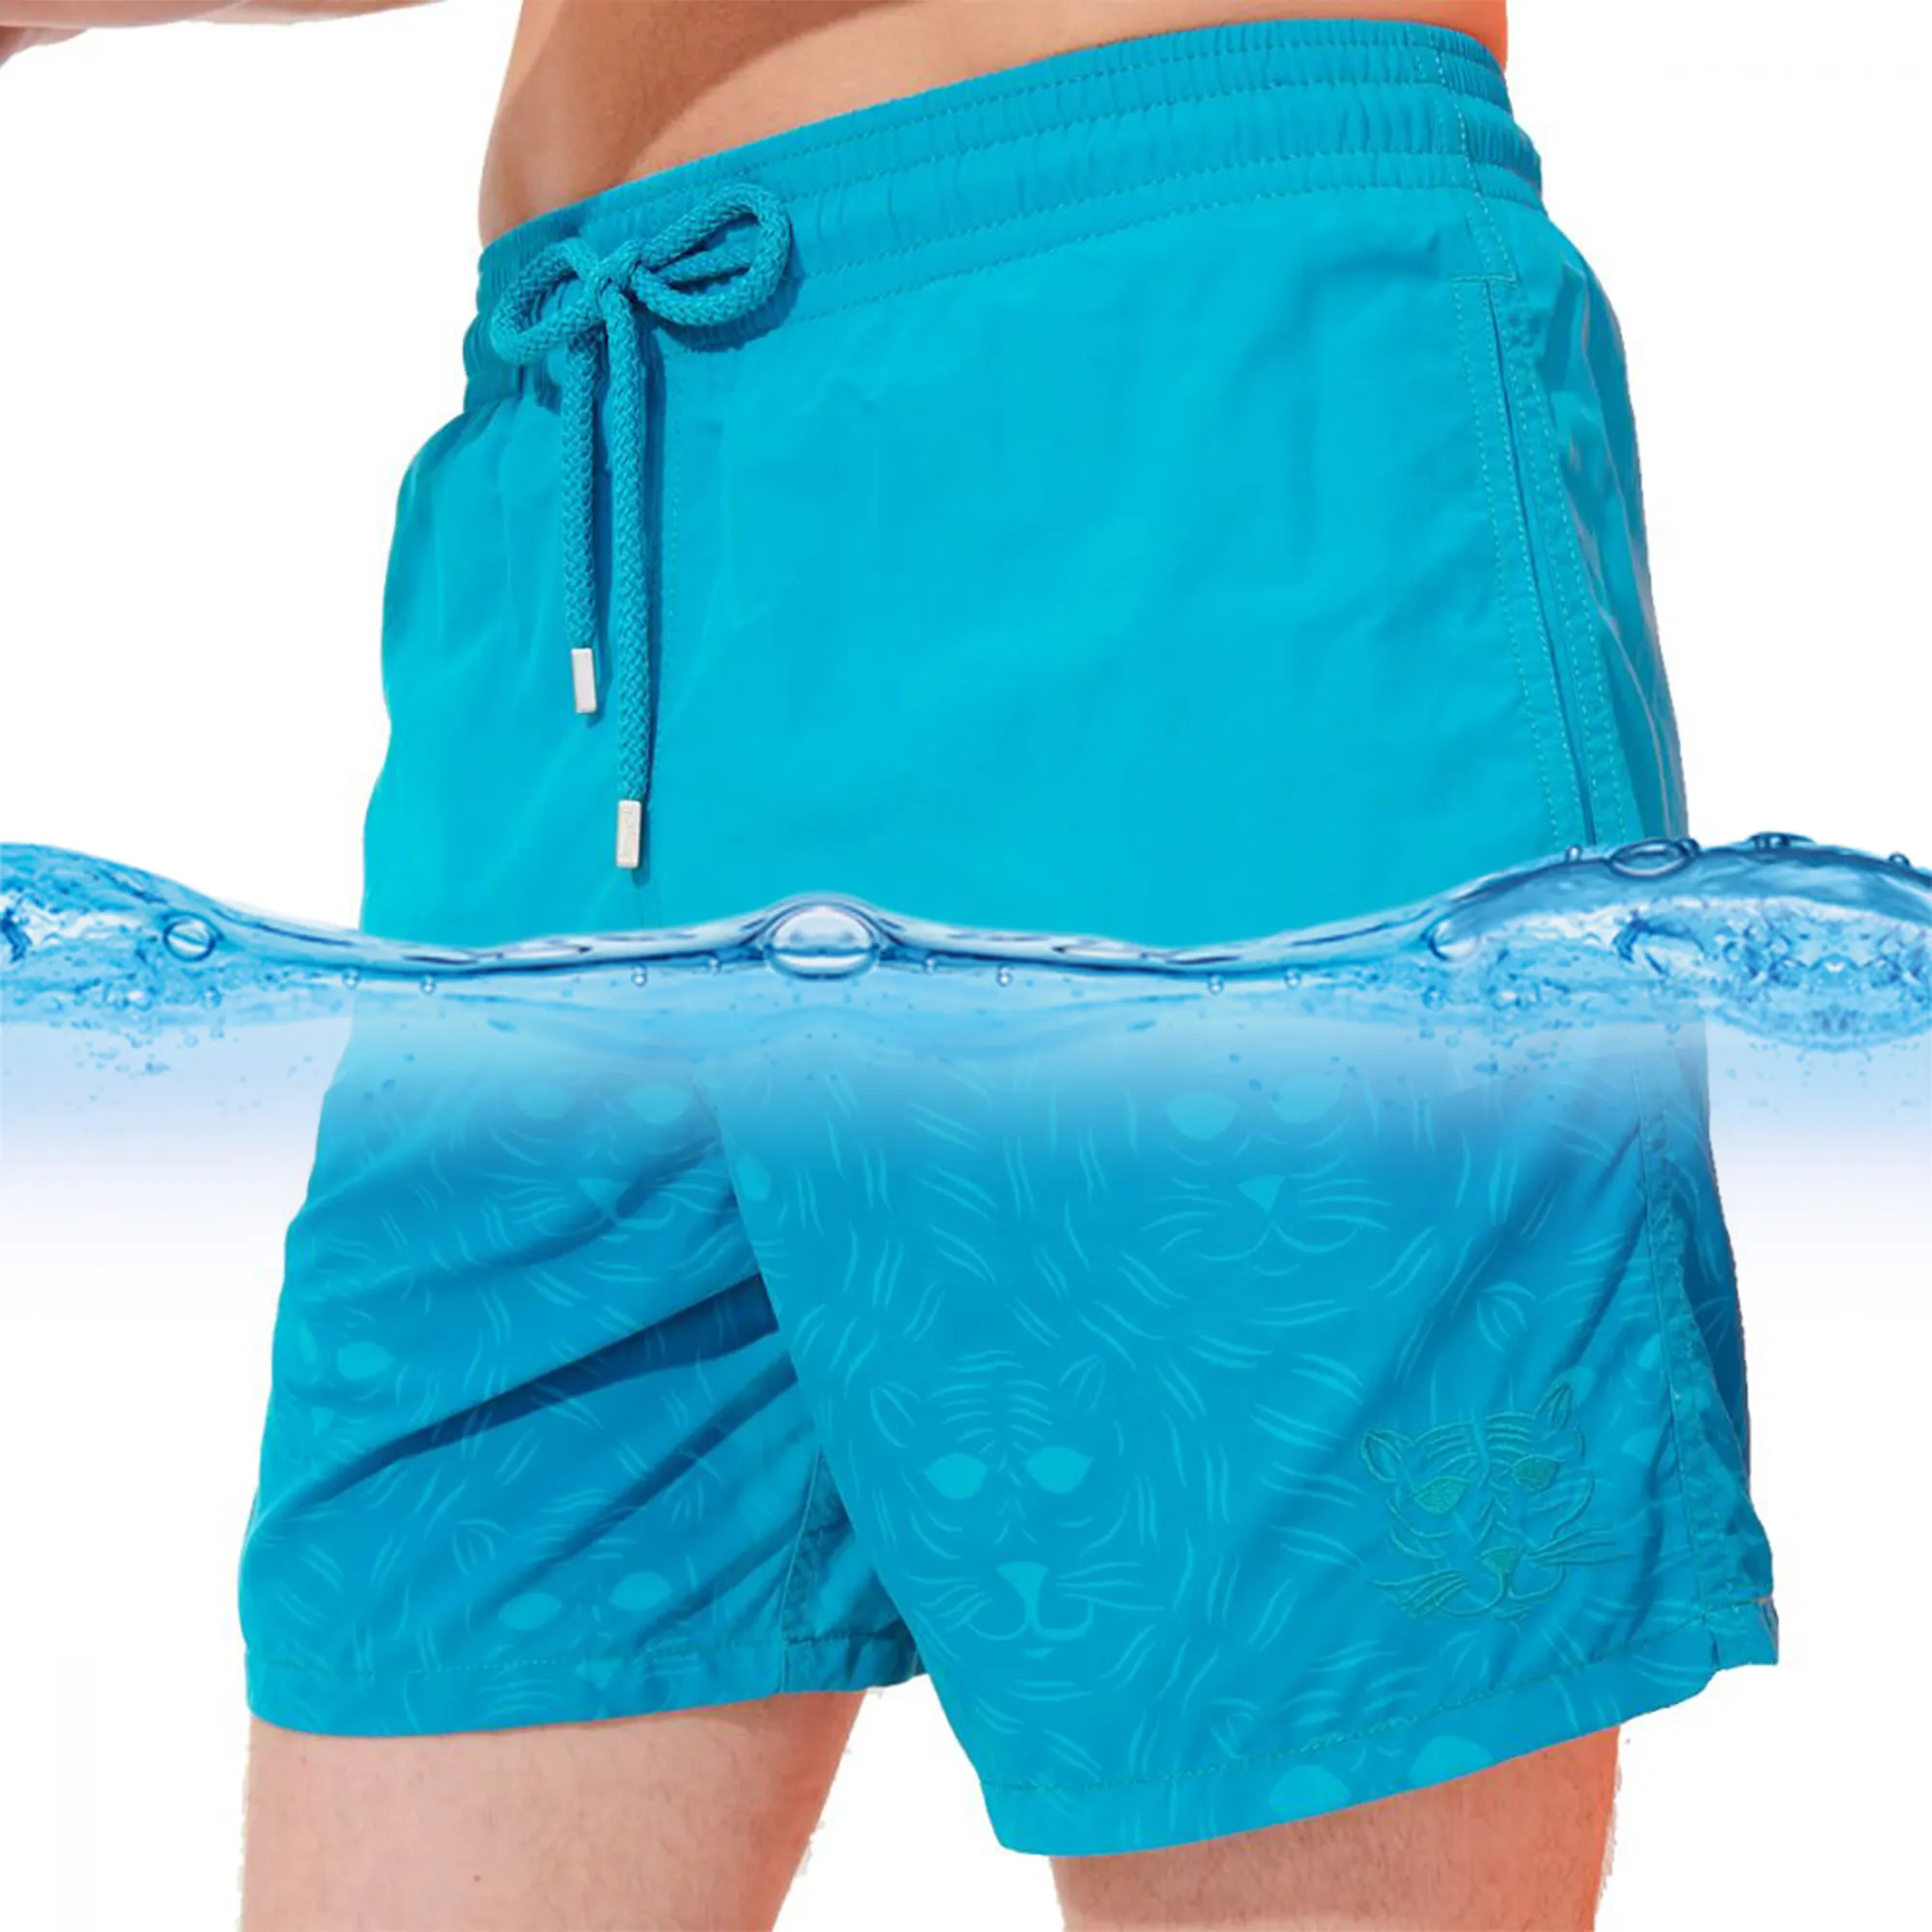 कस्टम मुद्रण Mens परिवर्तन रंगीन पानी प्रतिक्रियाशील सूट तैरना चड्डी